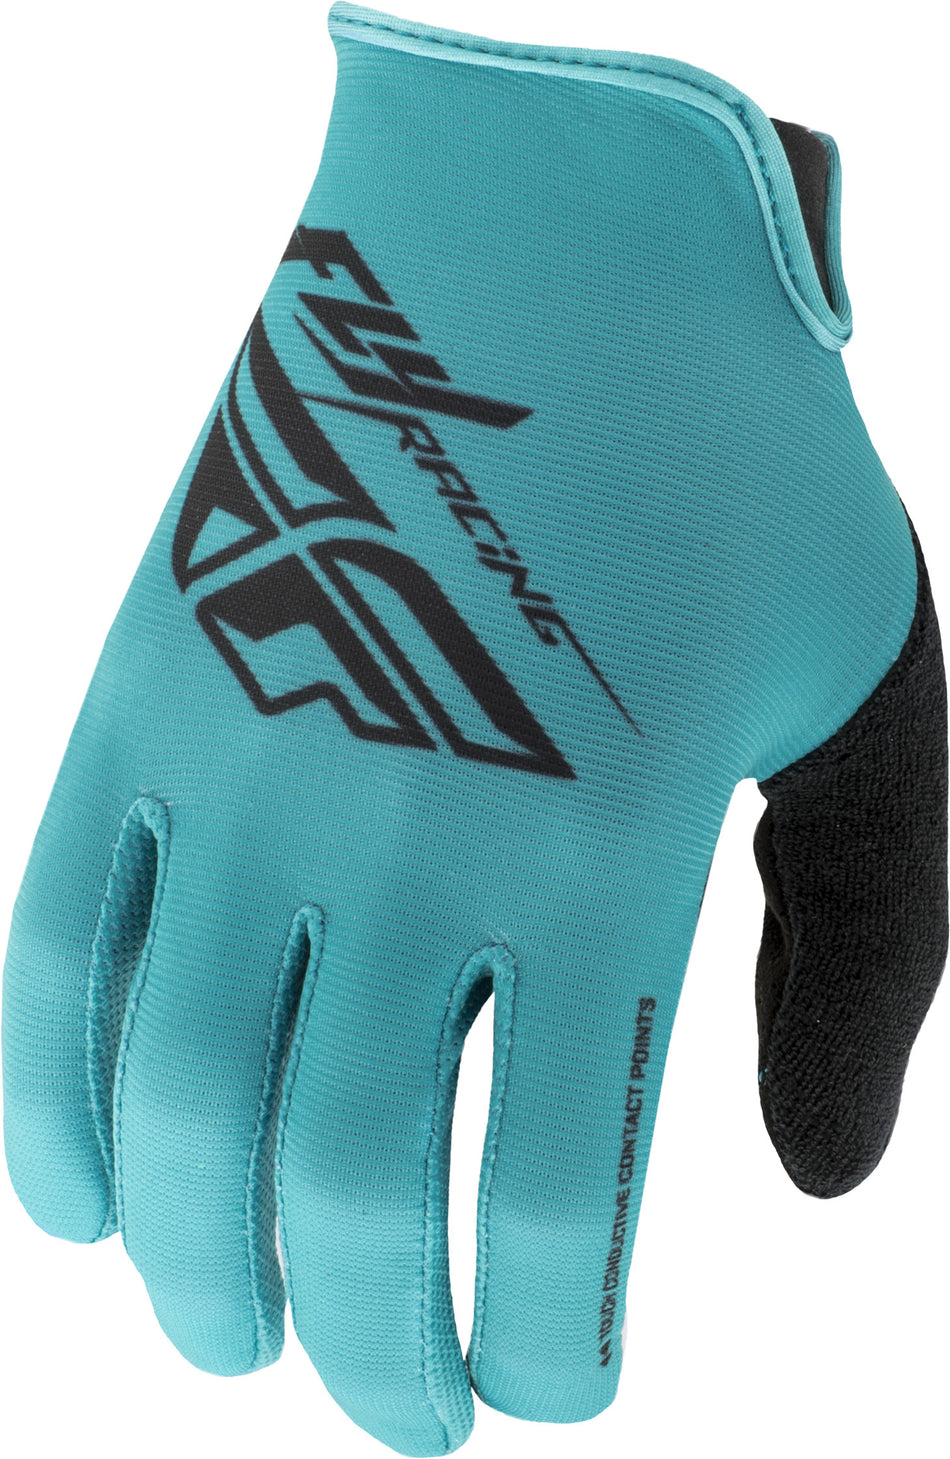 FLY RACING Media Gloves Teal/Black Sz 08 350-09708